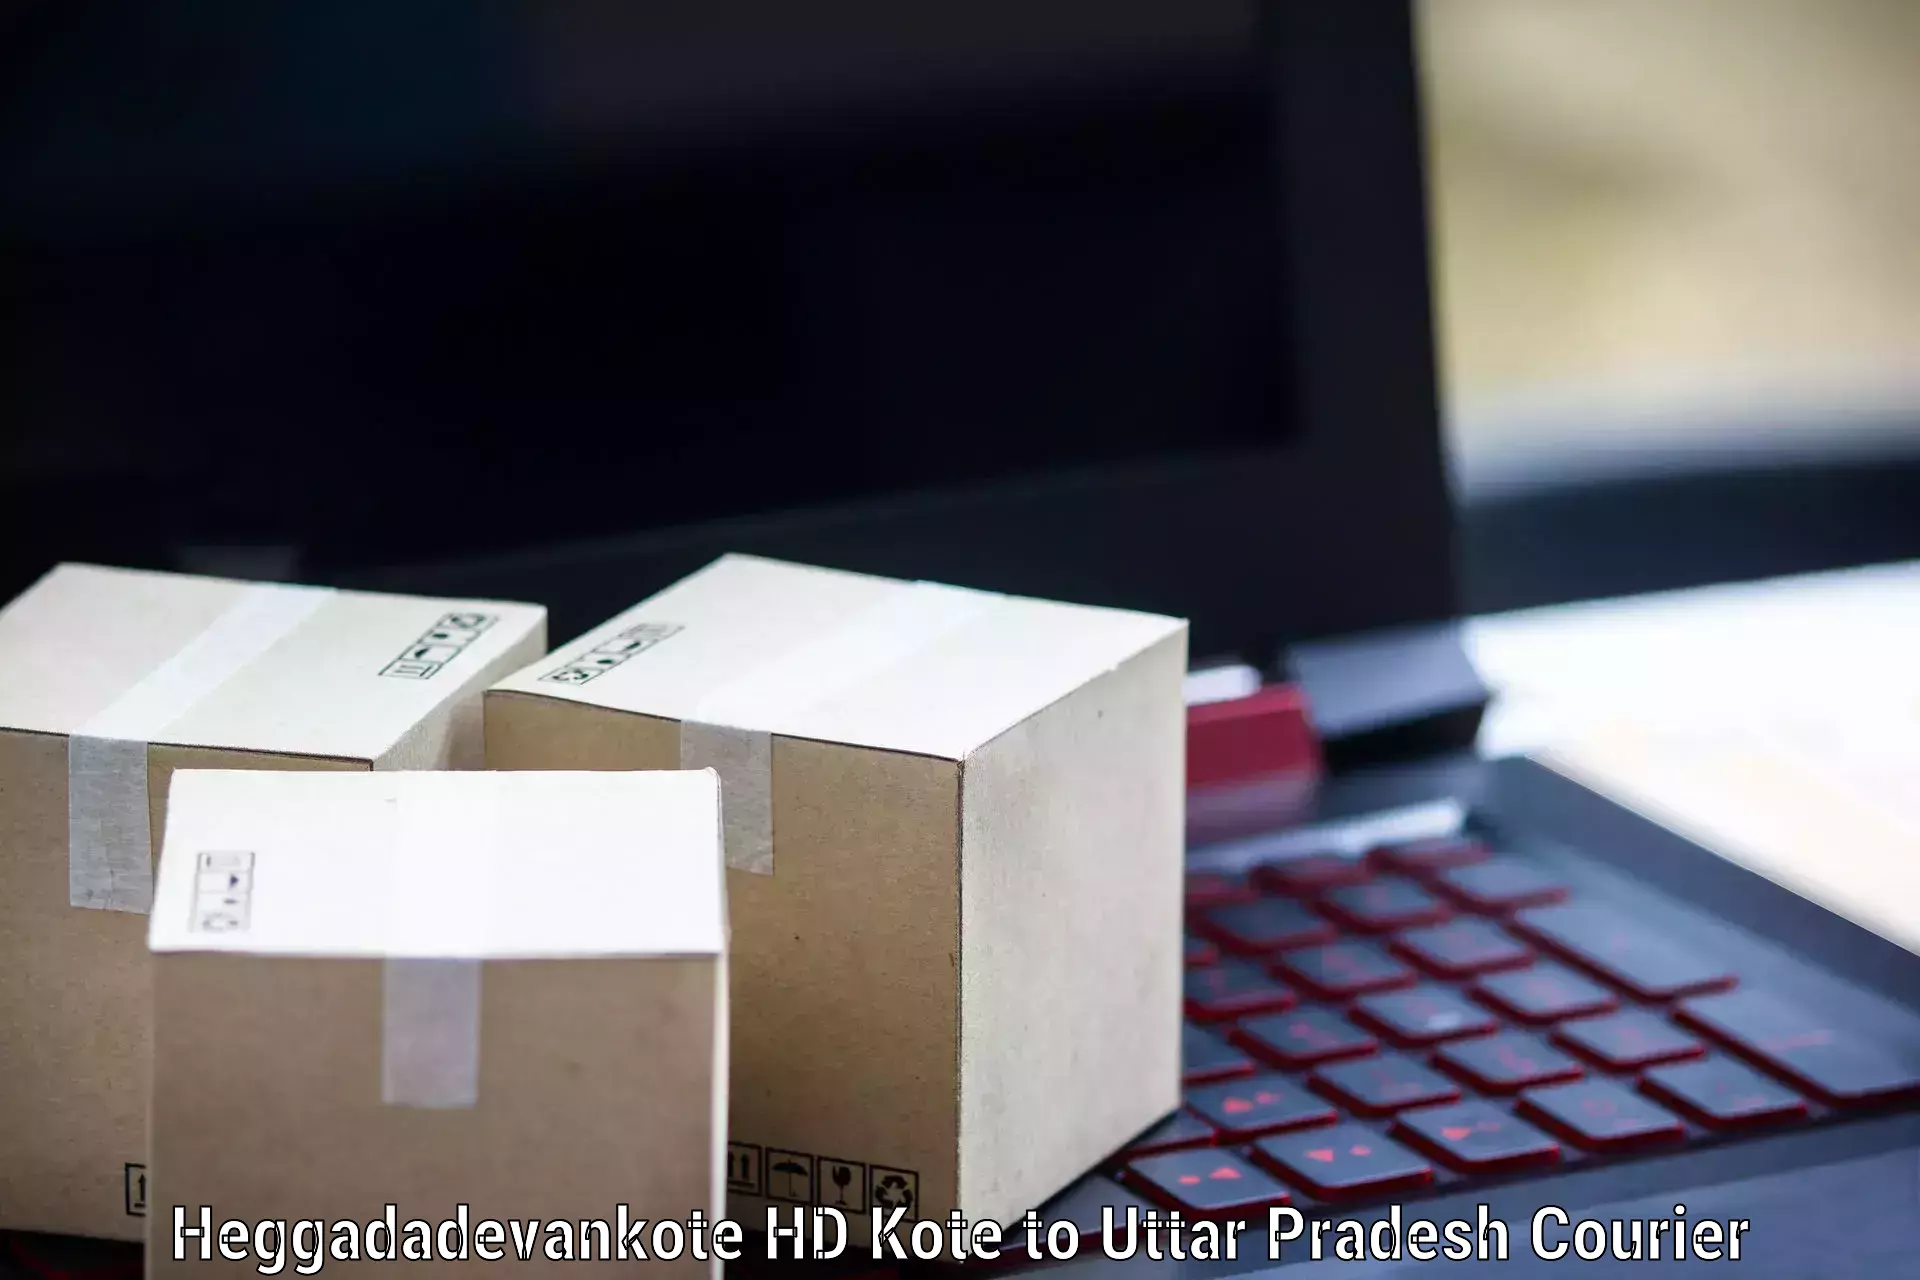 Courier service booking Heggadadevankote HD Kote to Uttar Pradesh